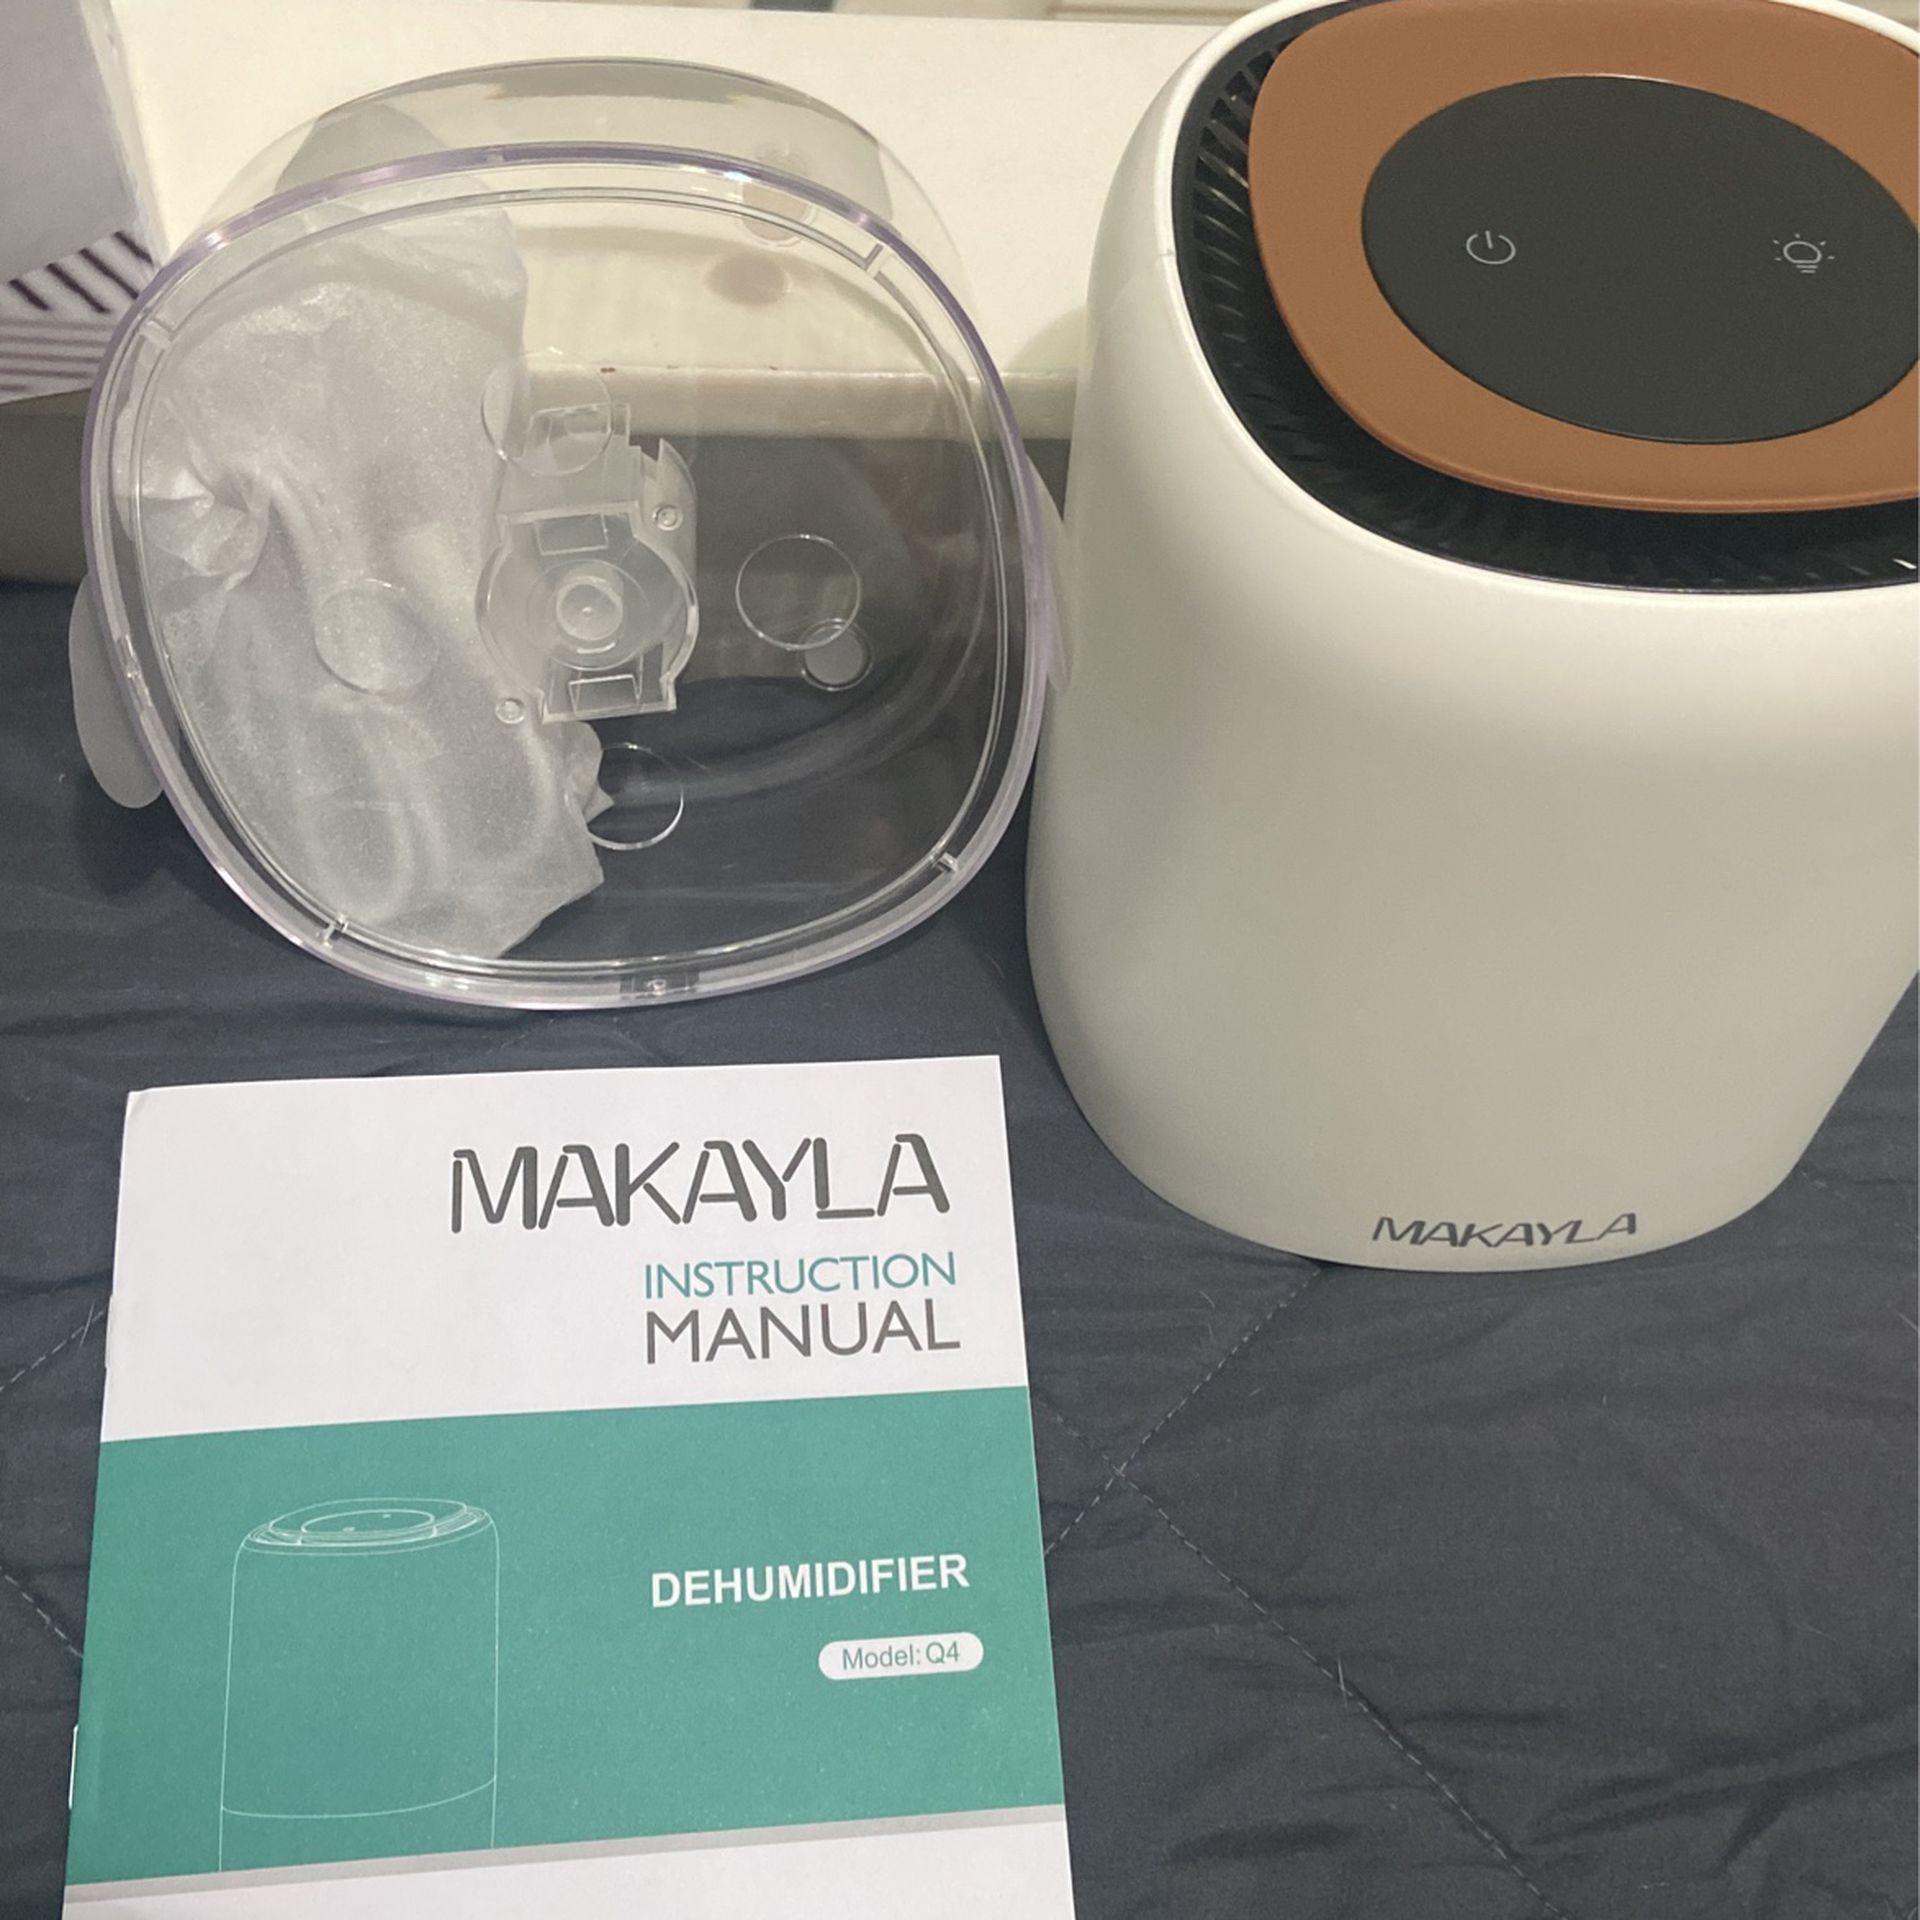 Makayla Dehumidifier Model Q4